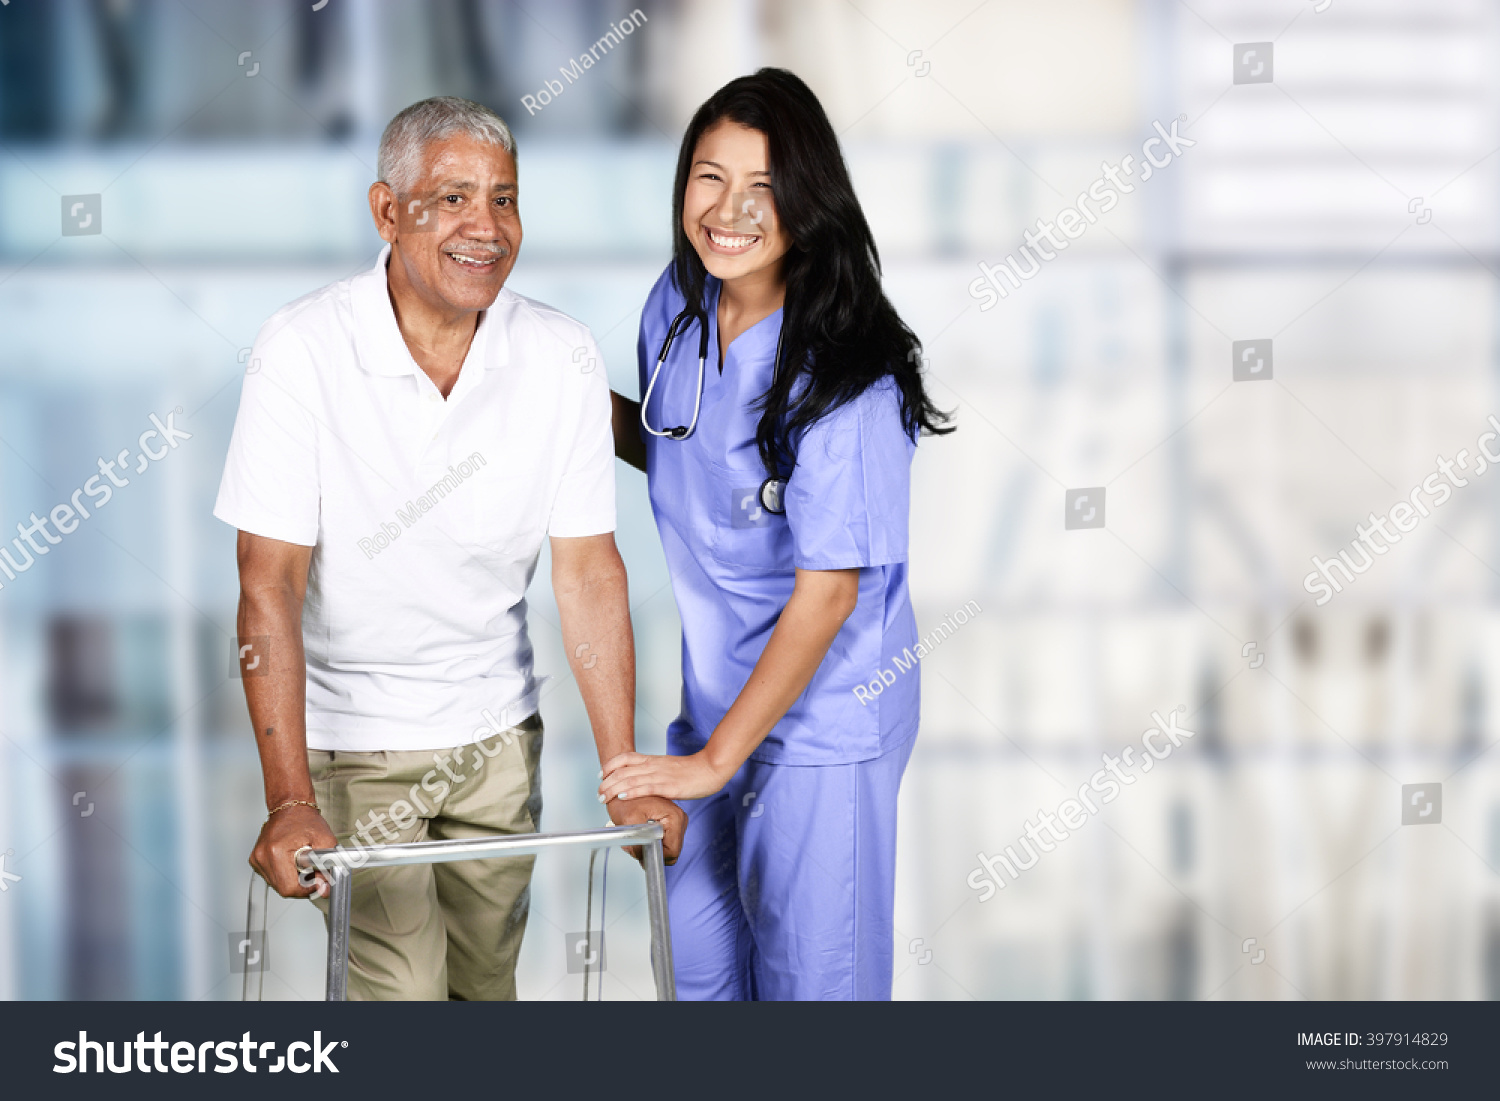 Nurse Taking Care Elderly Patient Stock Photo 397914829 Shutterstock